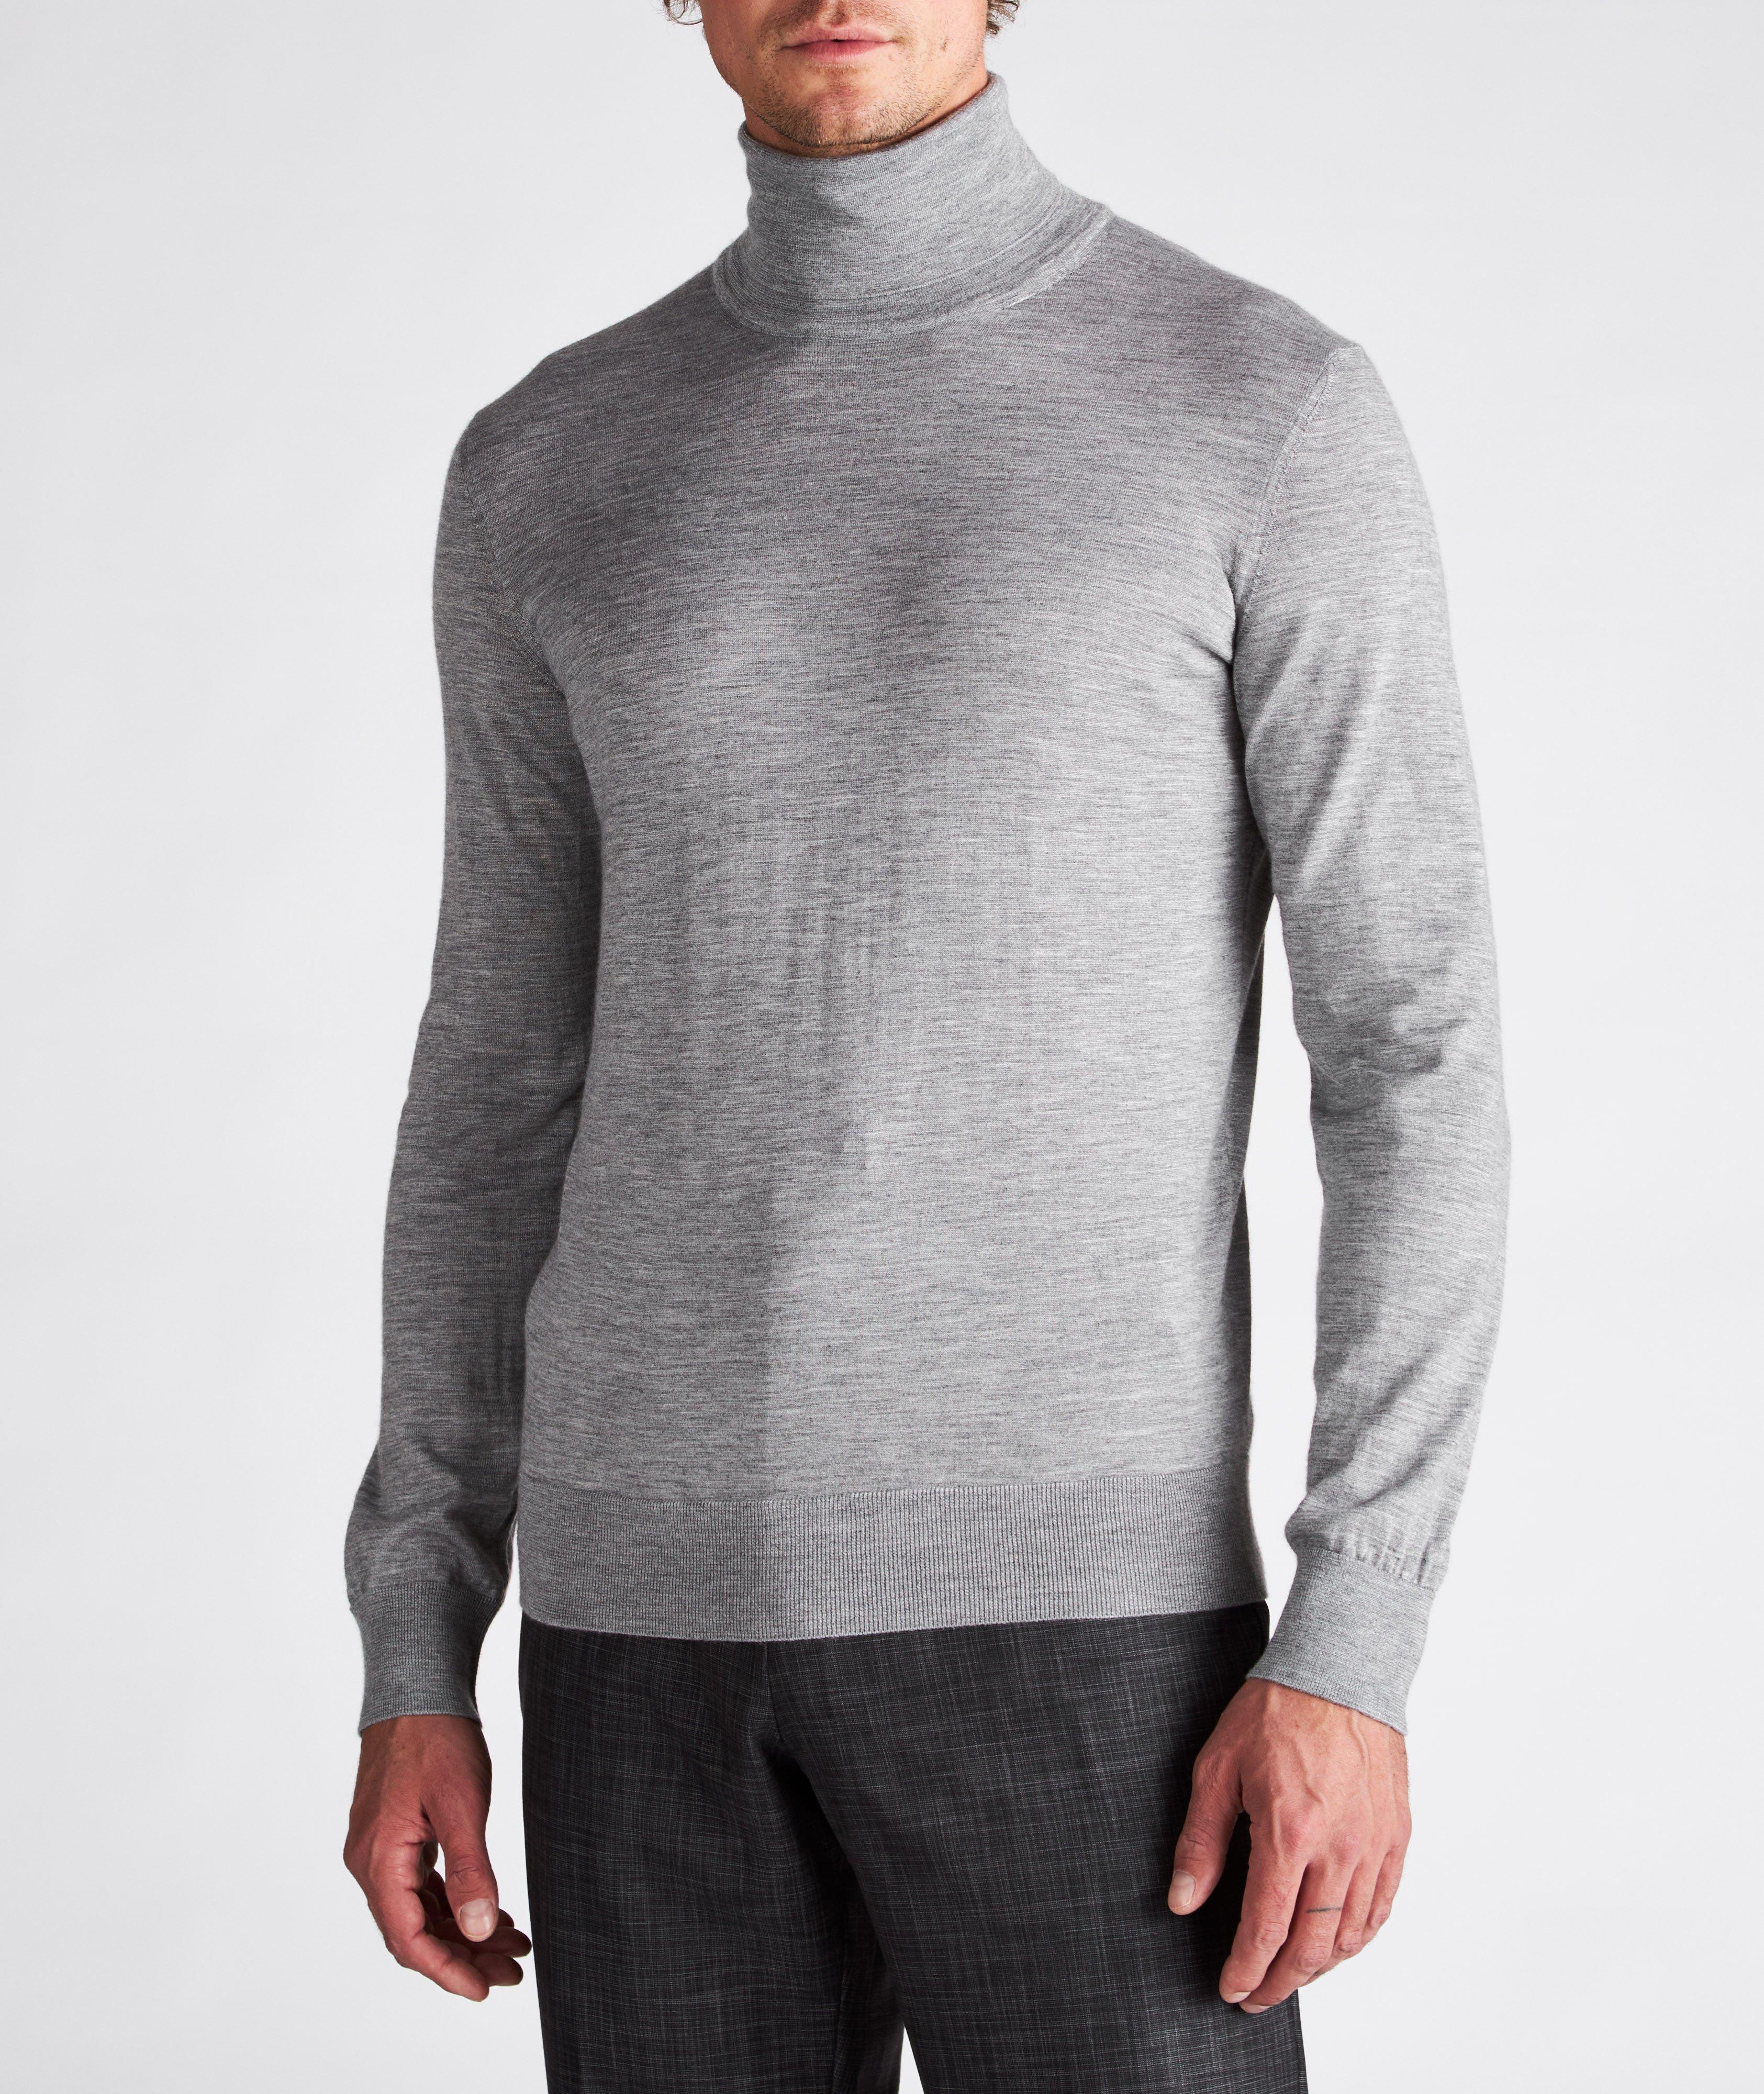 ZEGNA Cashseta Light Cashmere-Silk Turtleneck | Sweaters & Knits ...